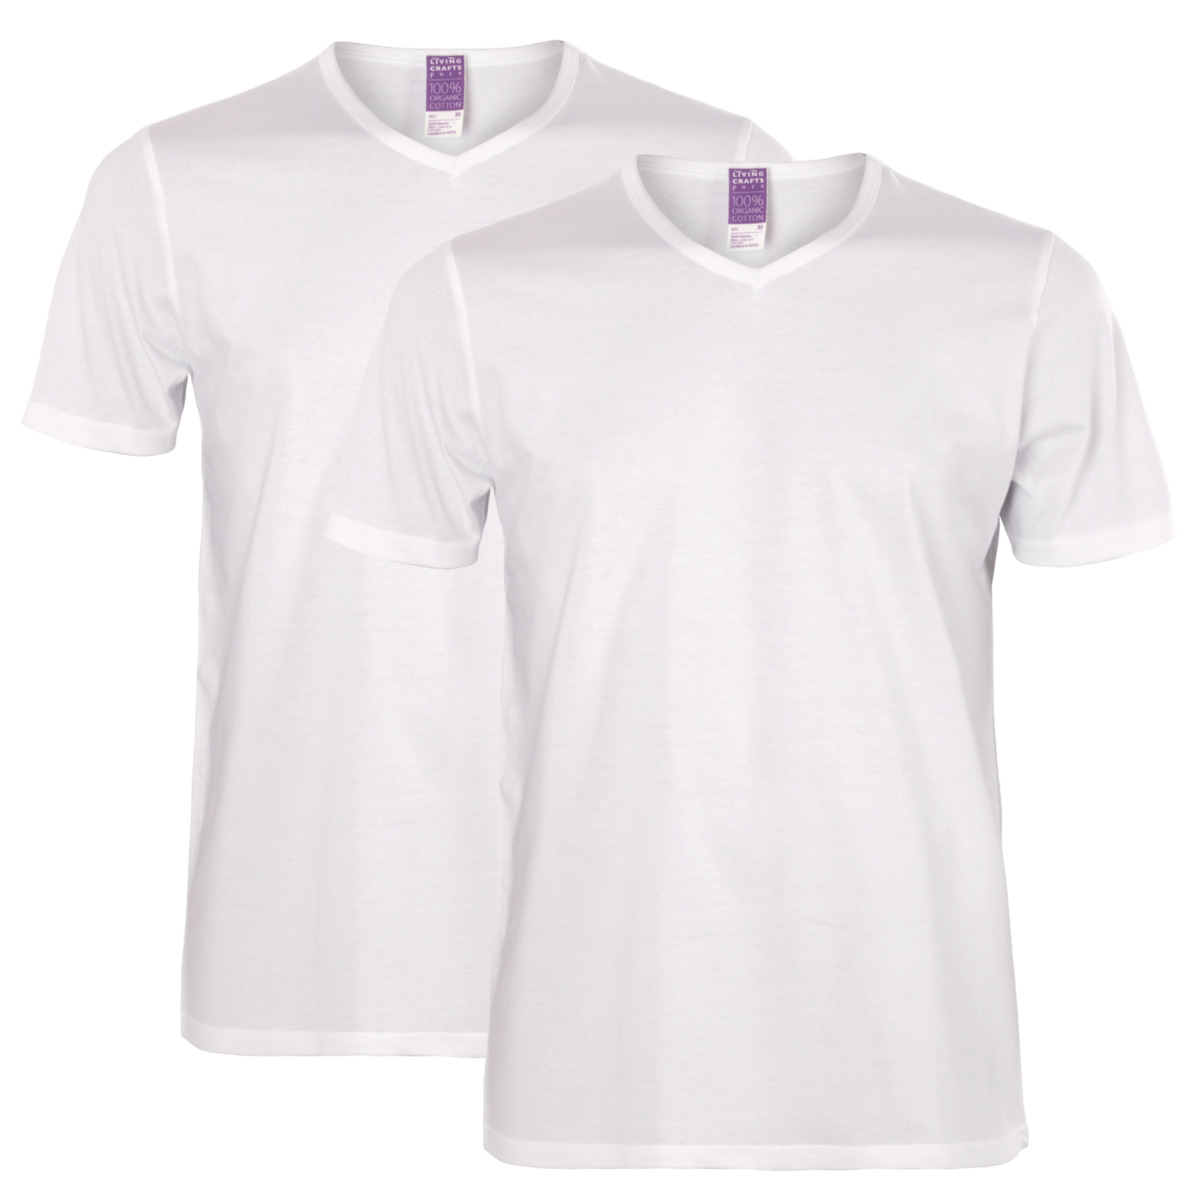 White T-shirt, pack of 2, DEAN